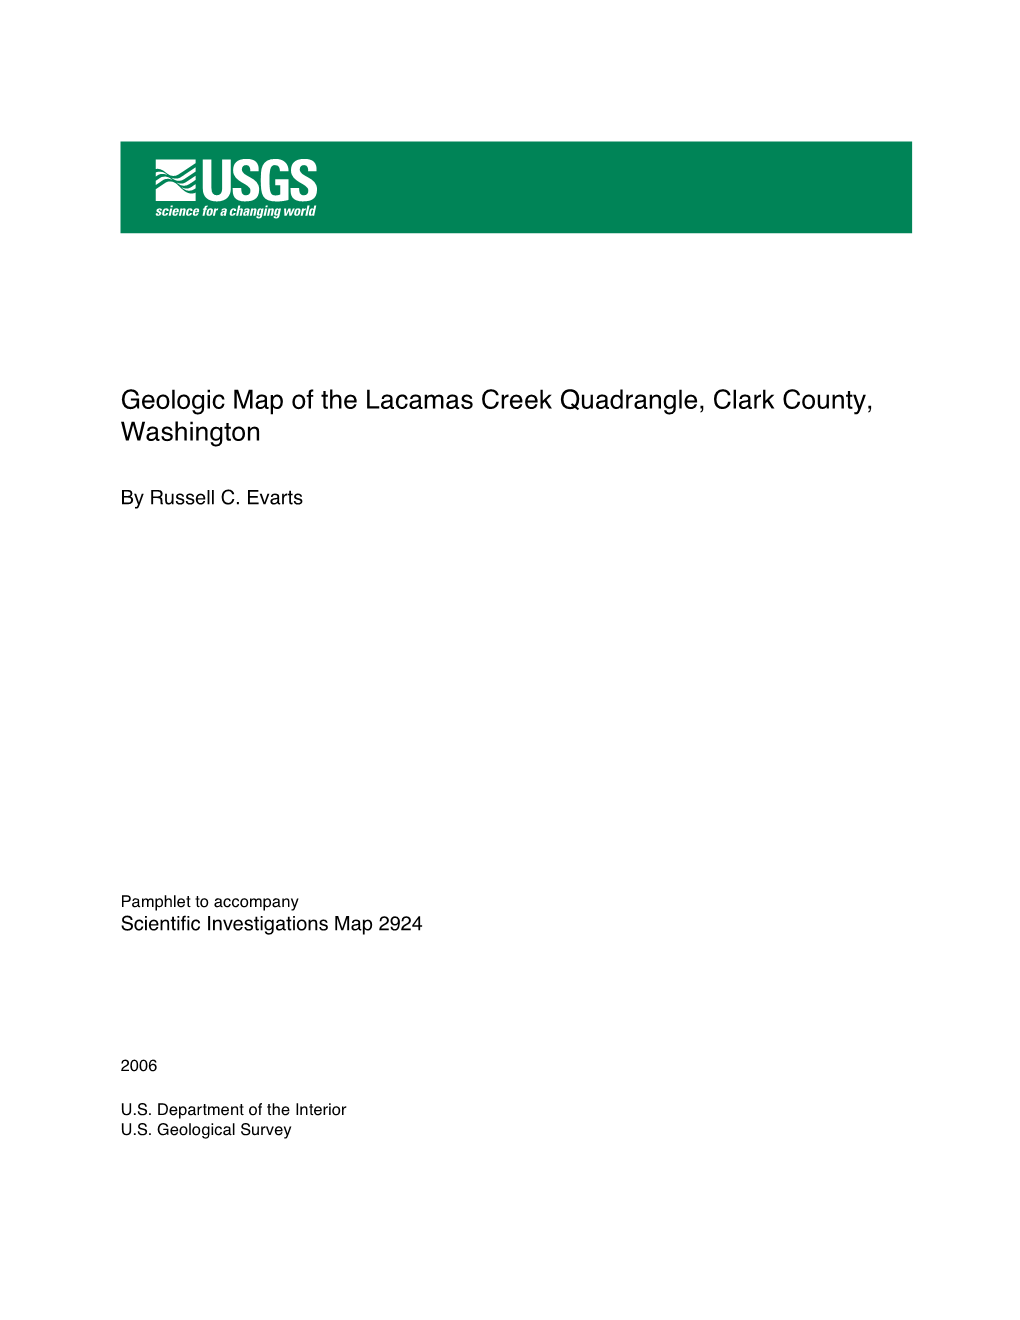 Geologic Map of the Lacamas Creek Quadrangle, Clark County, Washington